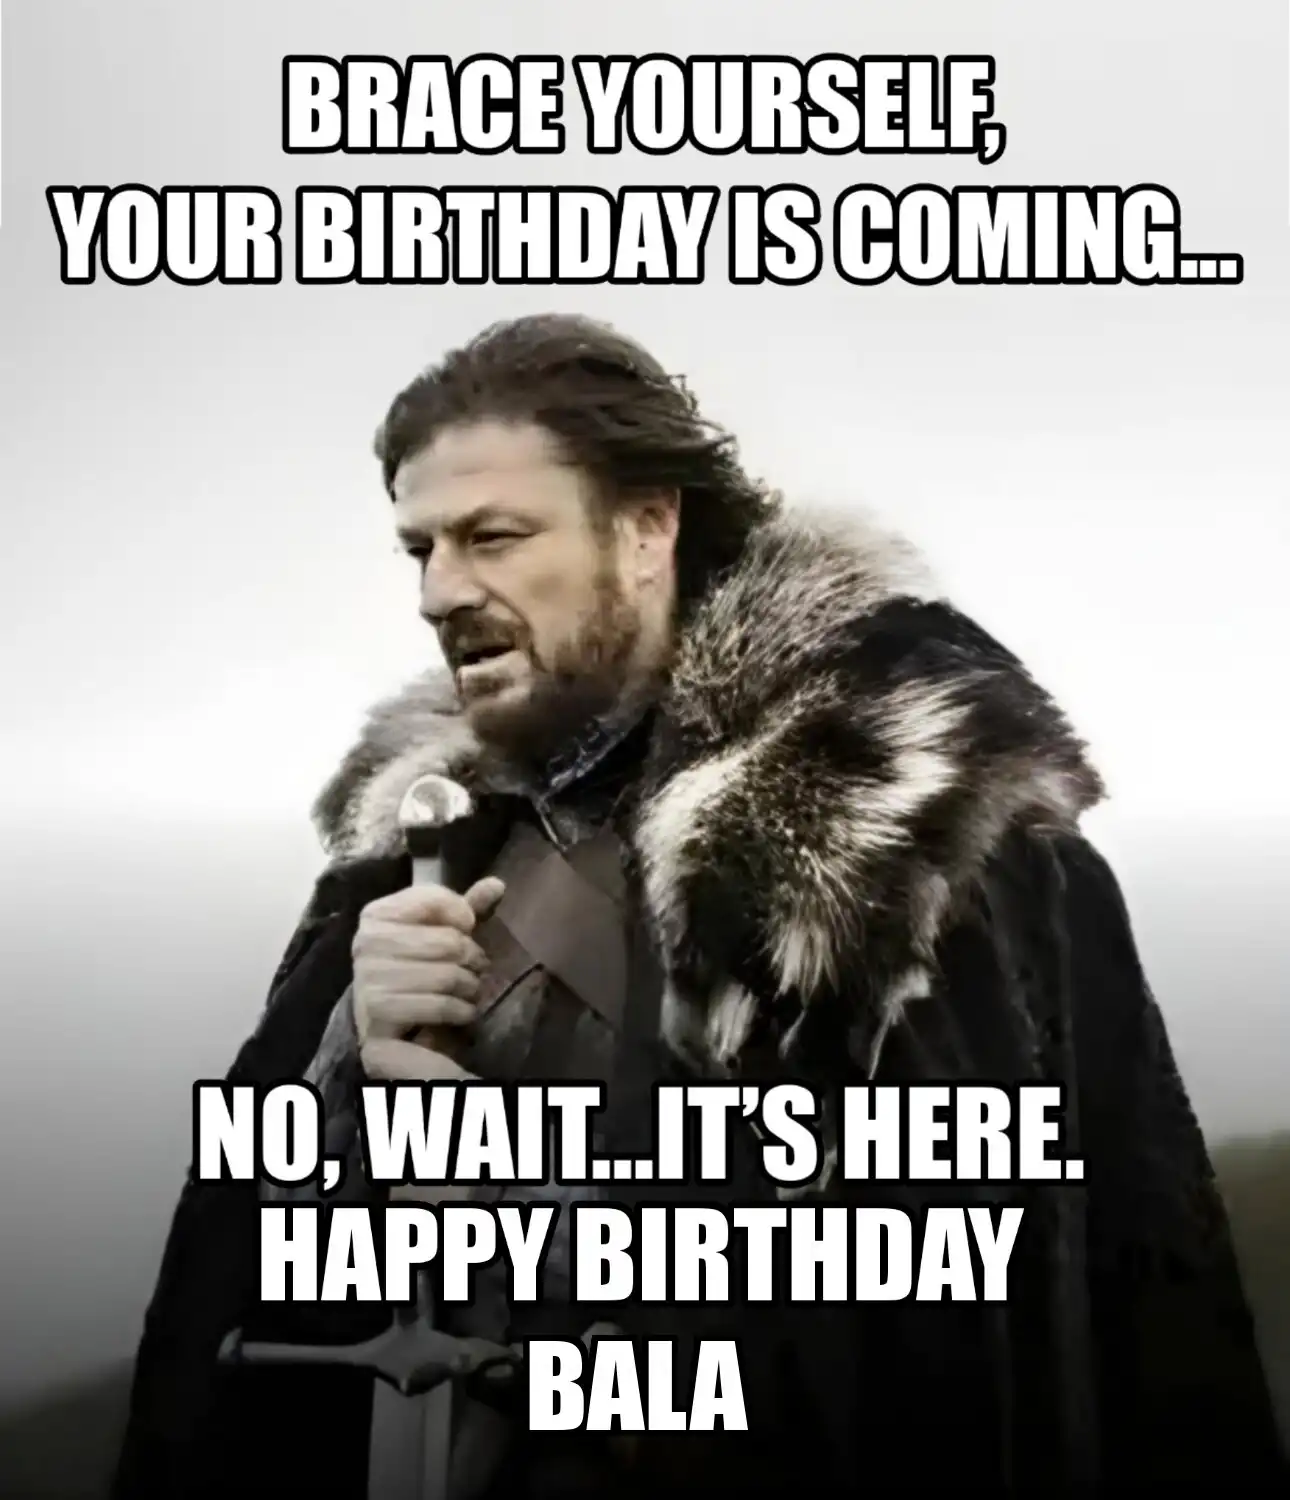 Happy Birthday Bala Brace Yourself Your Birthday Is Coming Meme